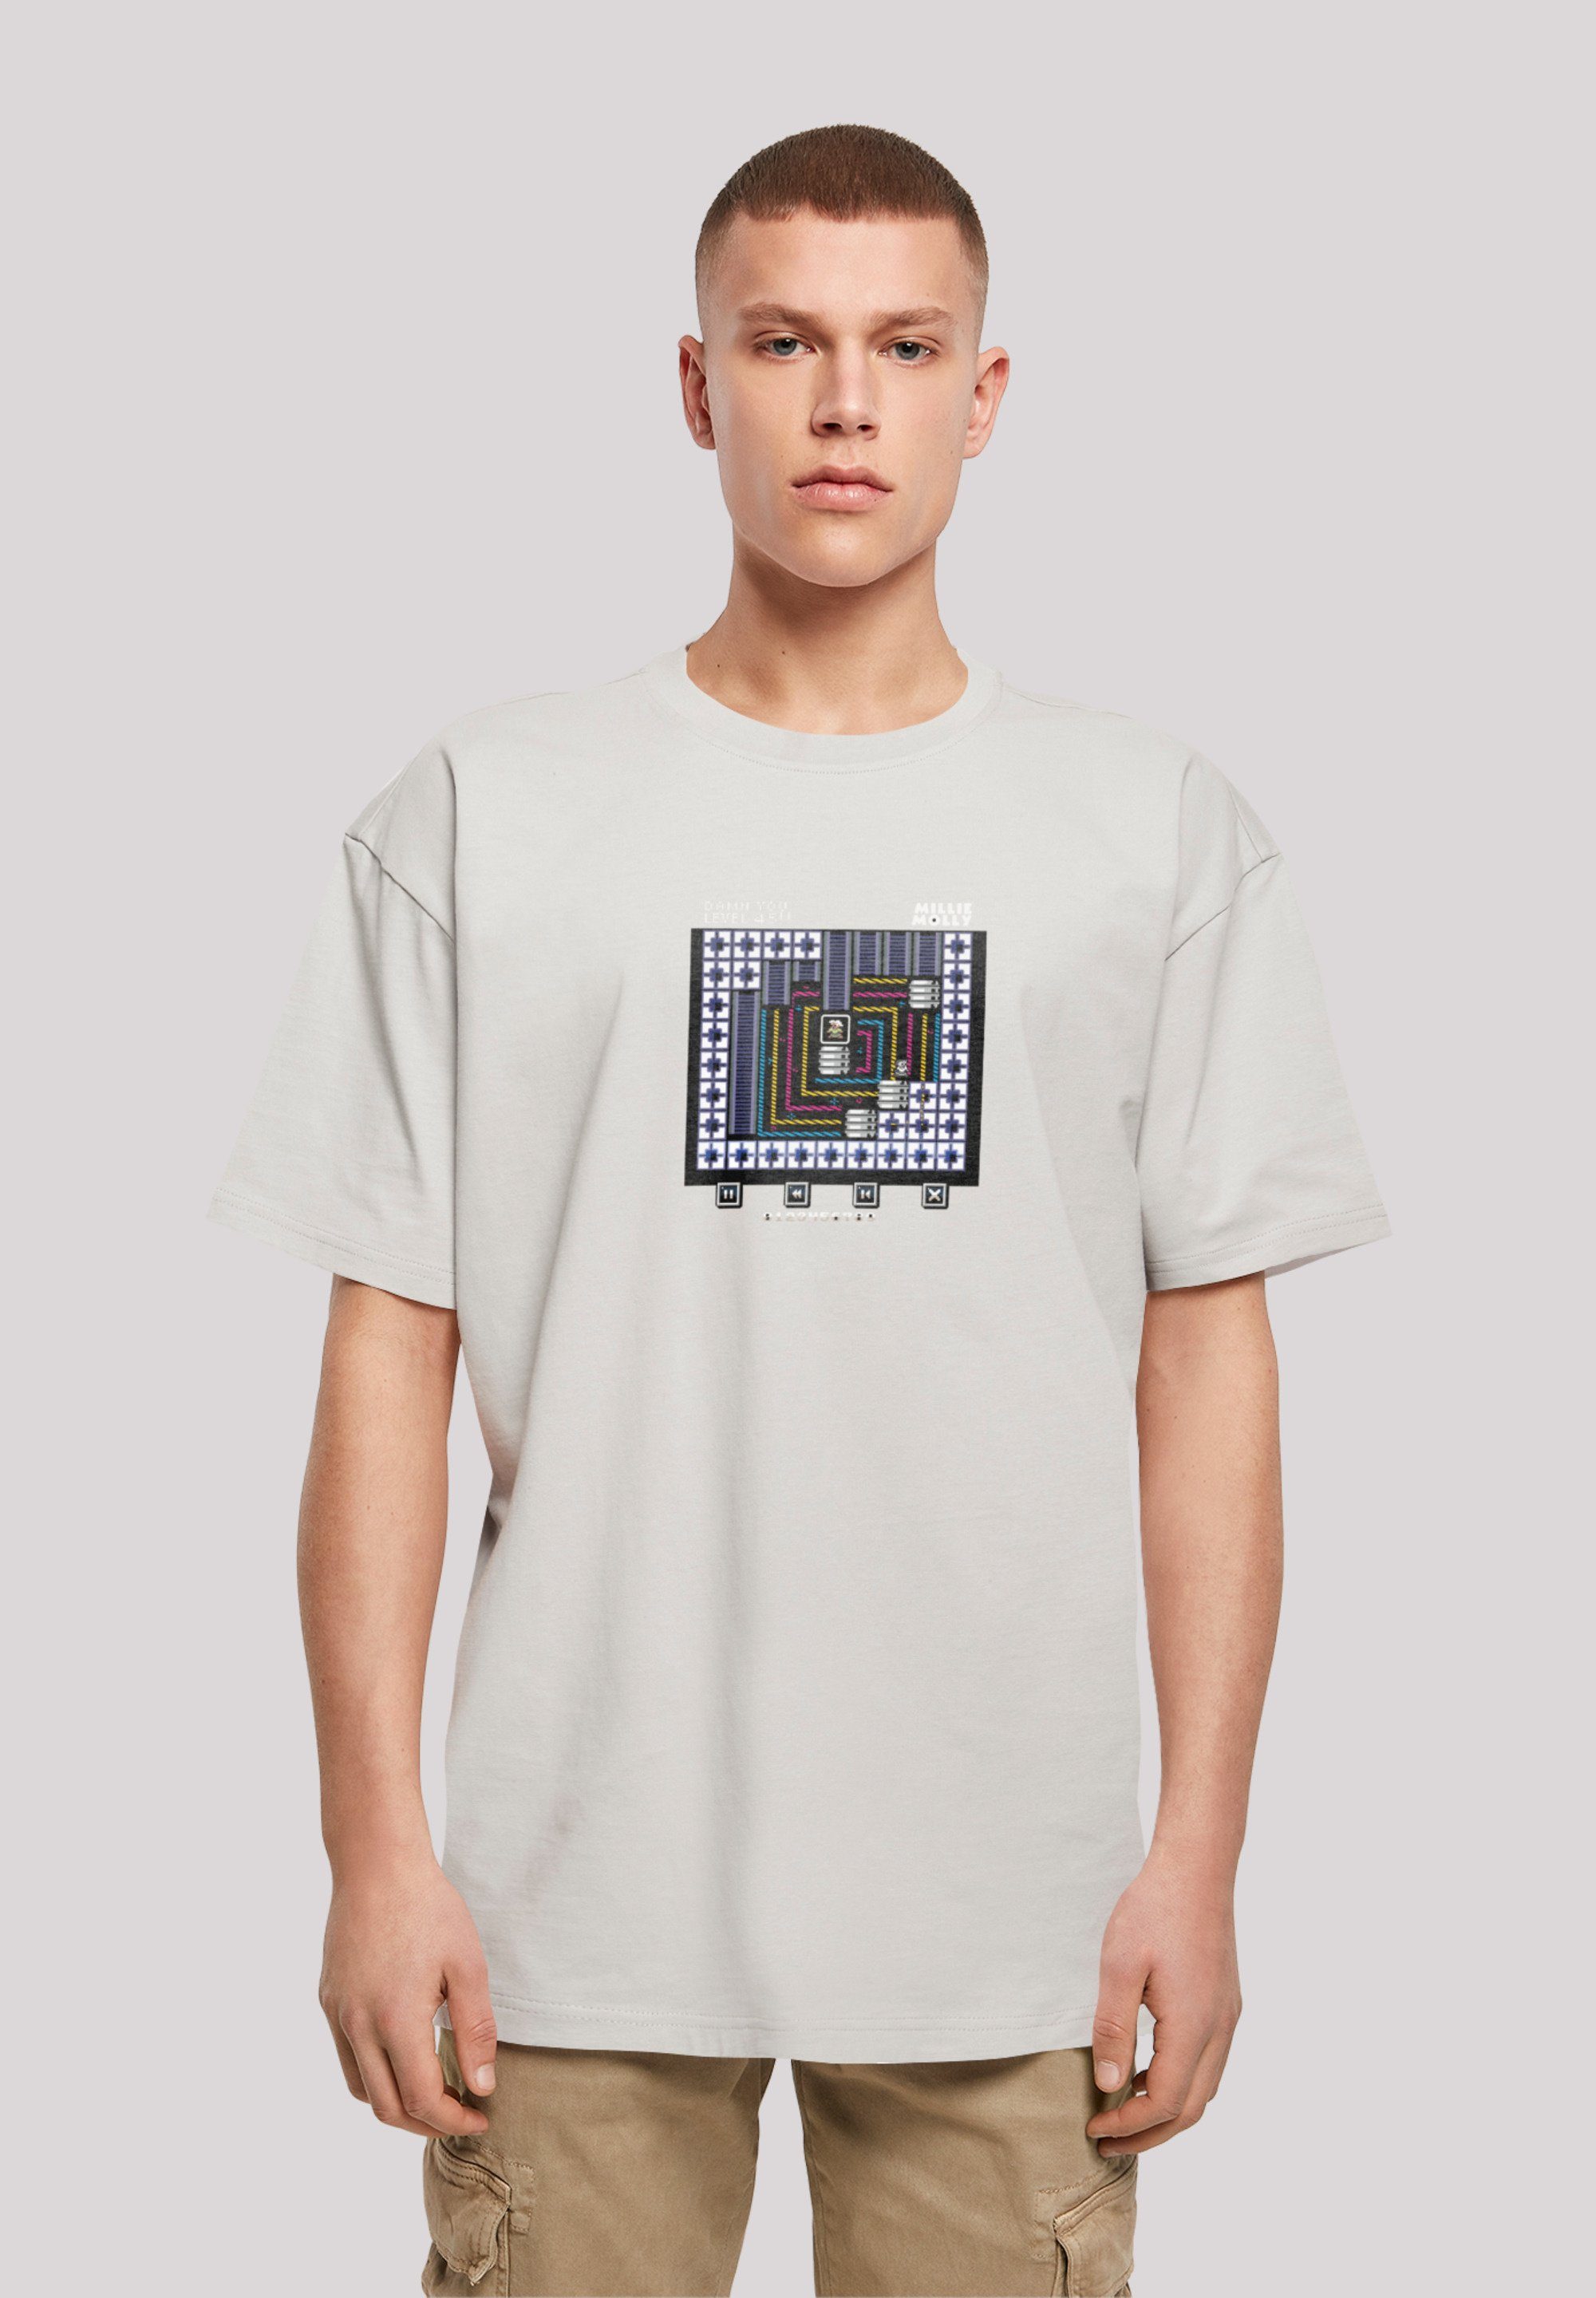 F4NT4STIC T-Shirt Level 45 Millie Mollie C64 Retro Gaming SEVENSQUARED Print lightasphalt